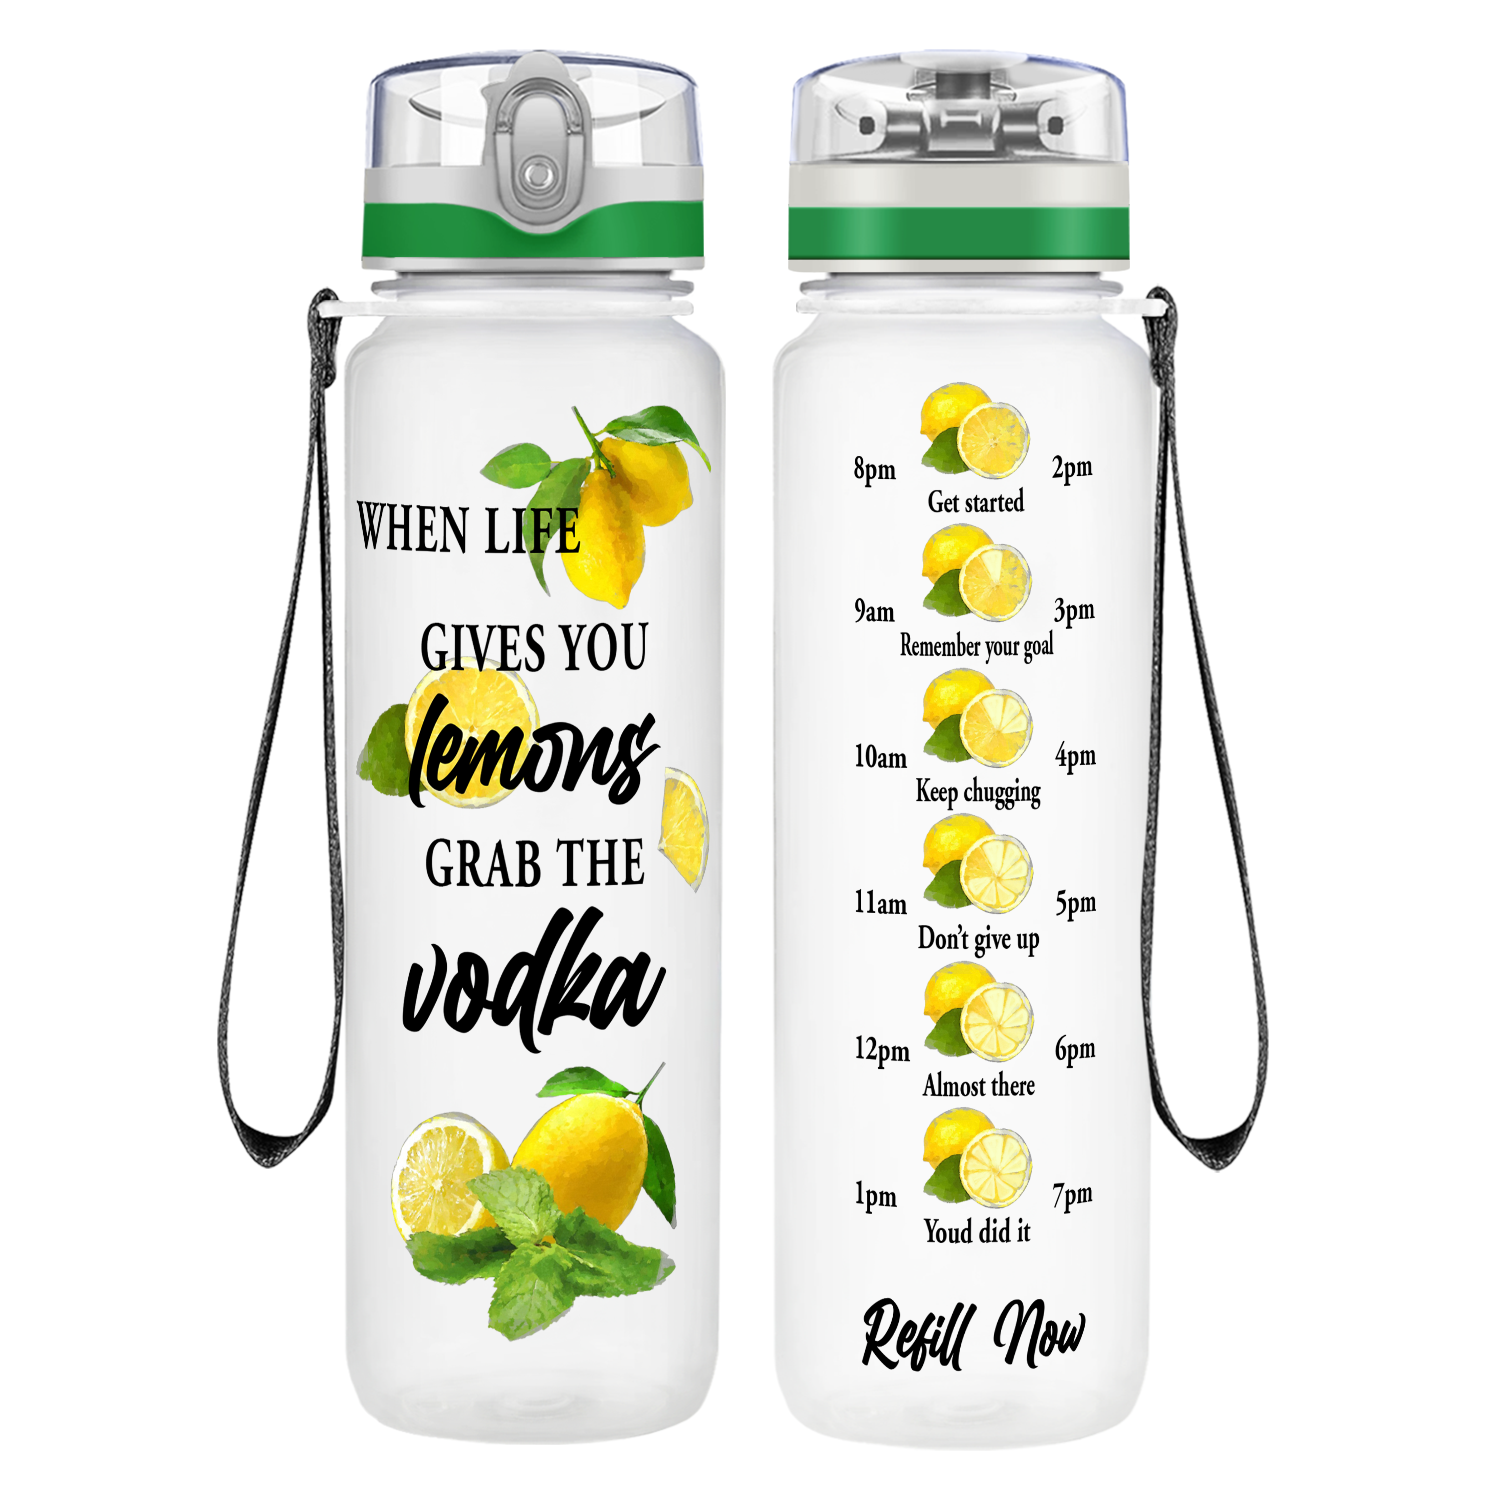 When Life Gives You Lemons Grab the Vodka on 32 oz Motivational Tracking Water Bottle